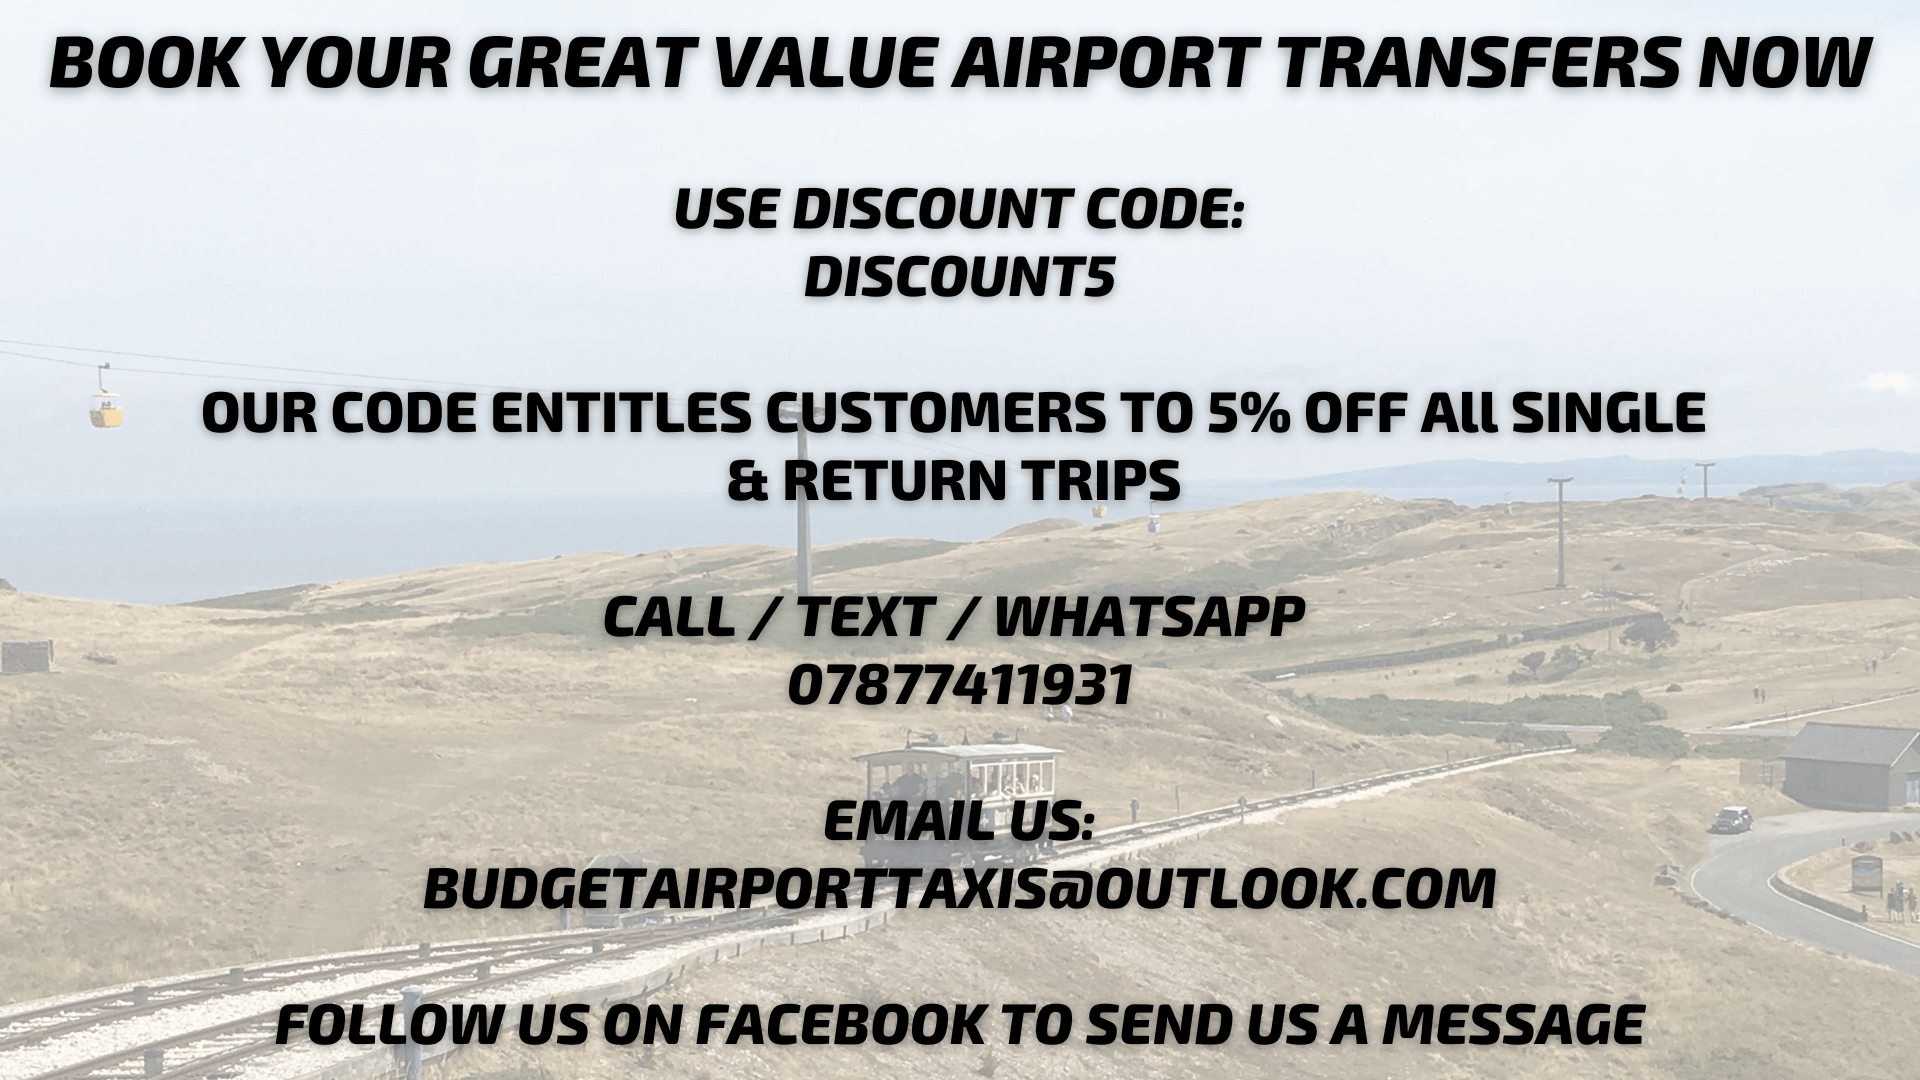 kilmarnock airport taxi transfer 5% discount